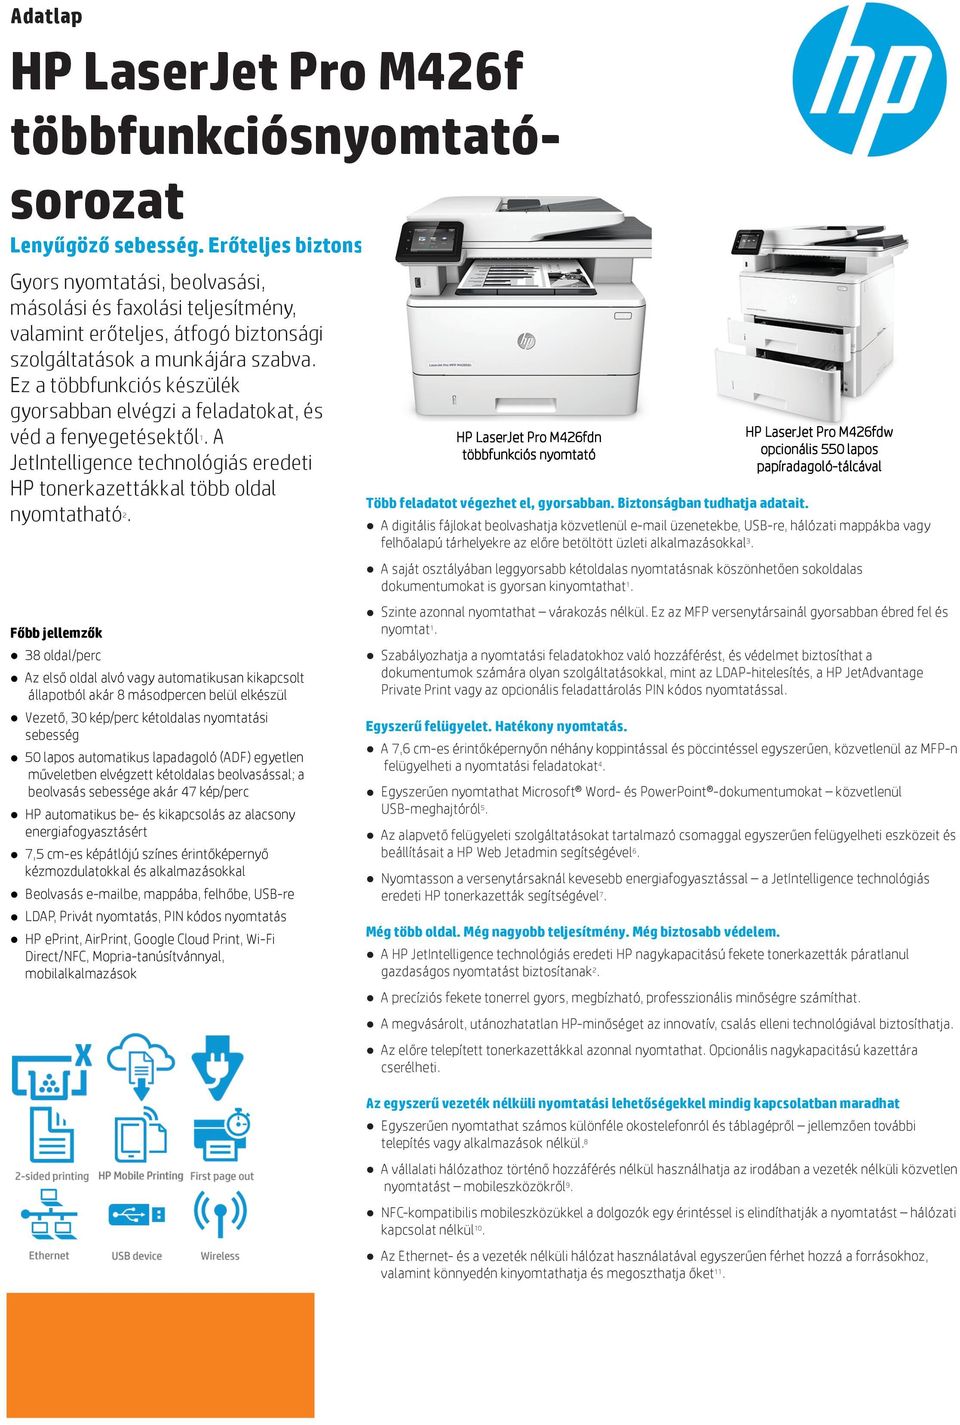 HP LaserJet Pro M426f többfunkciósnyomtatósorozat - PDF Ingyenes letöltés